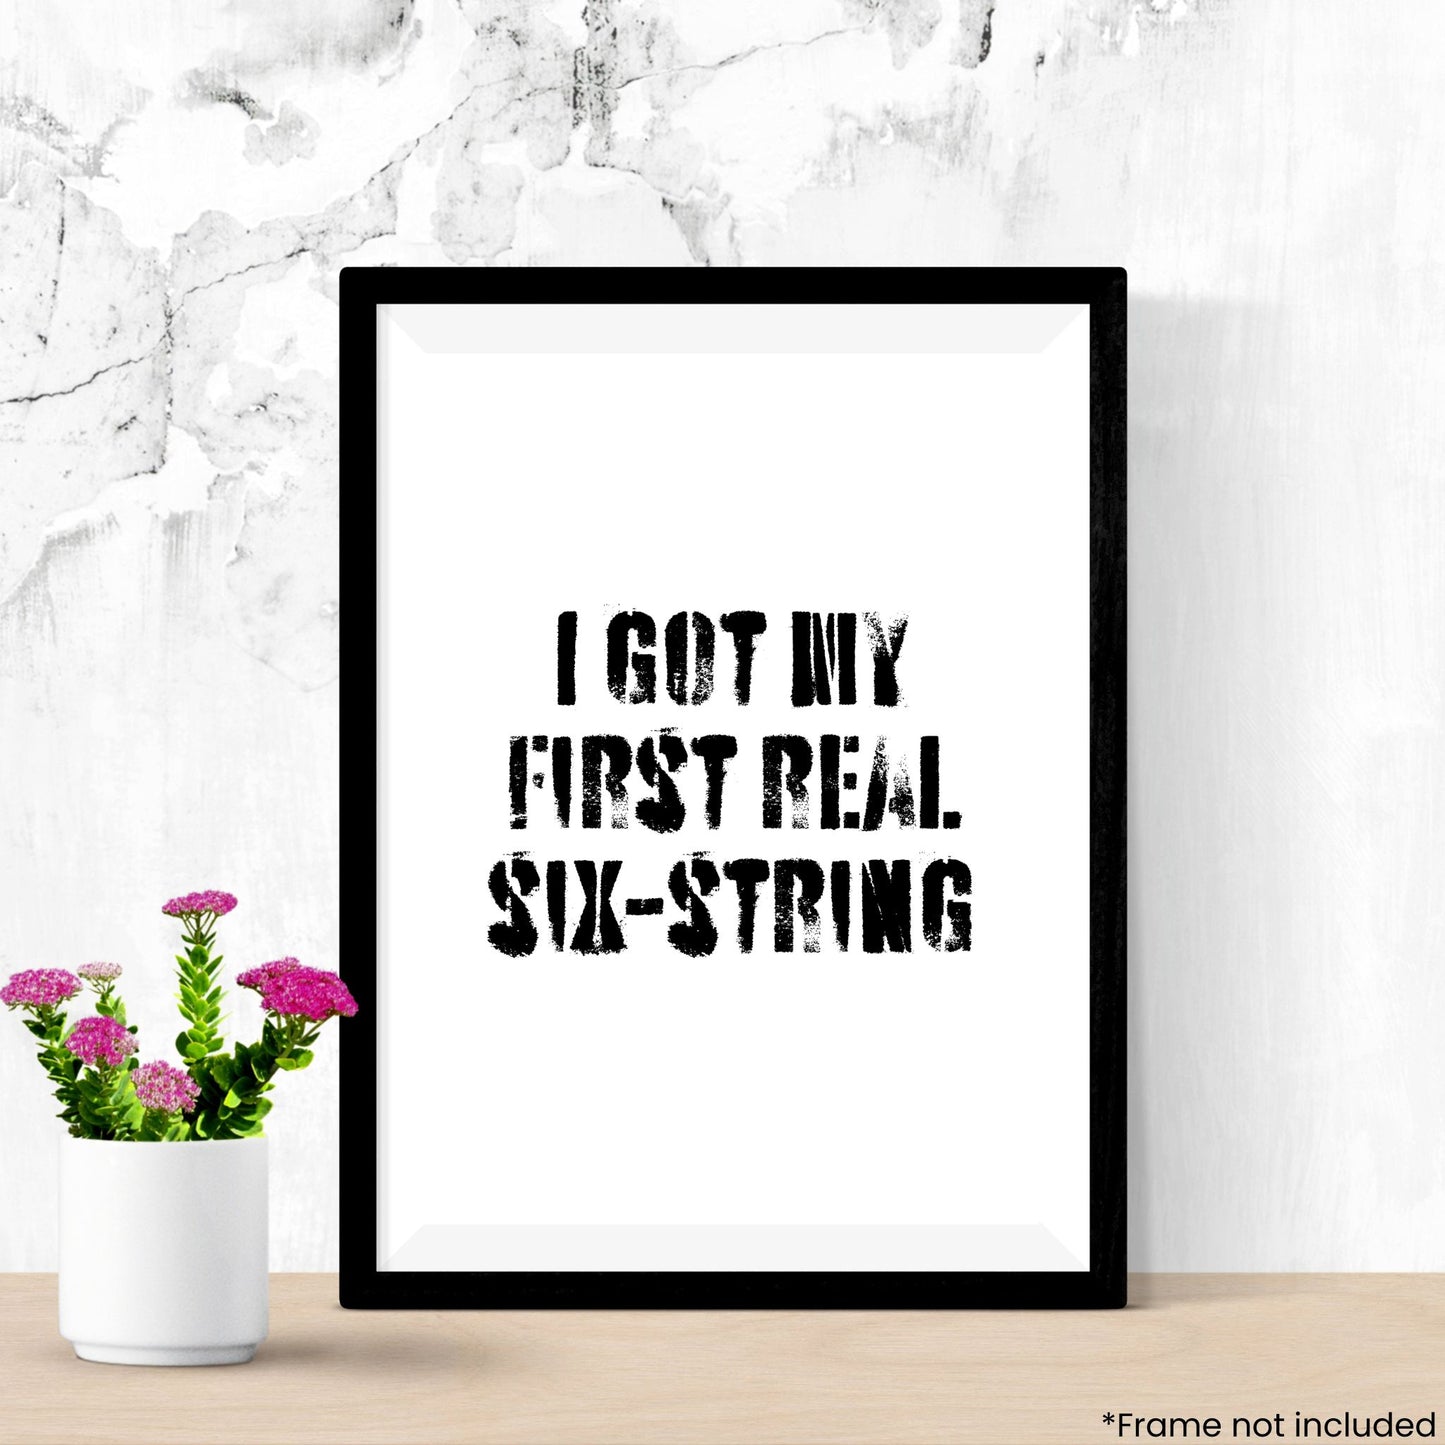 six-string in frame